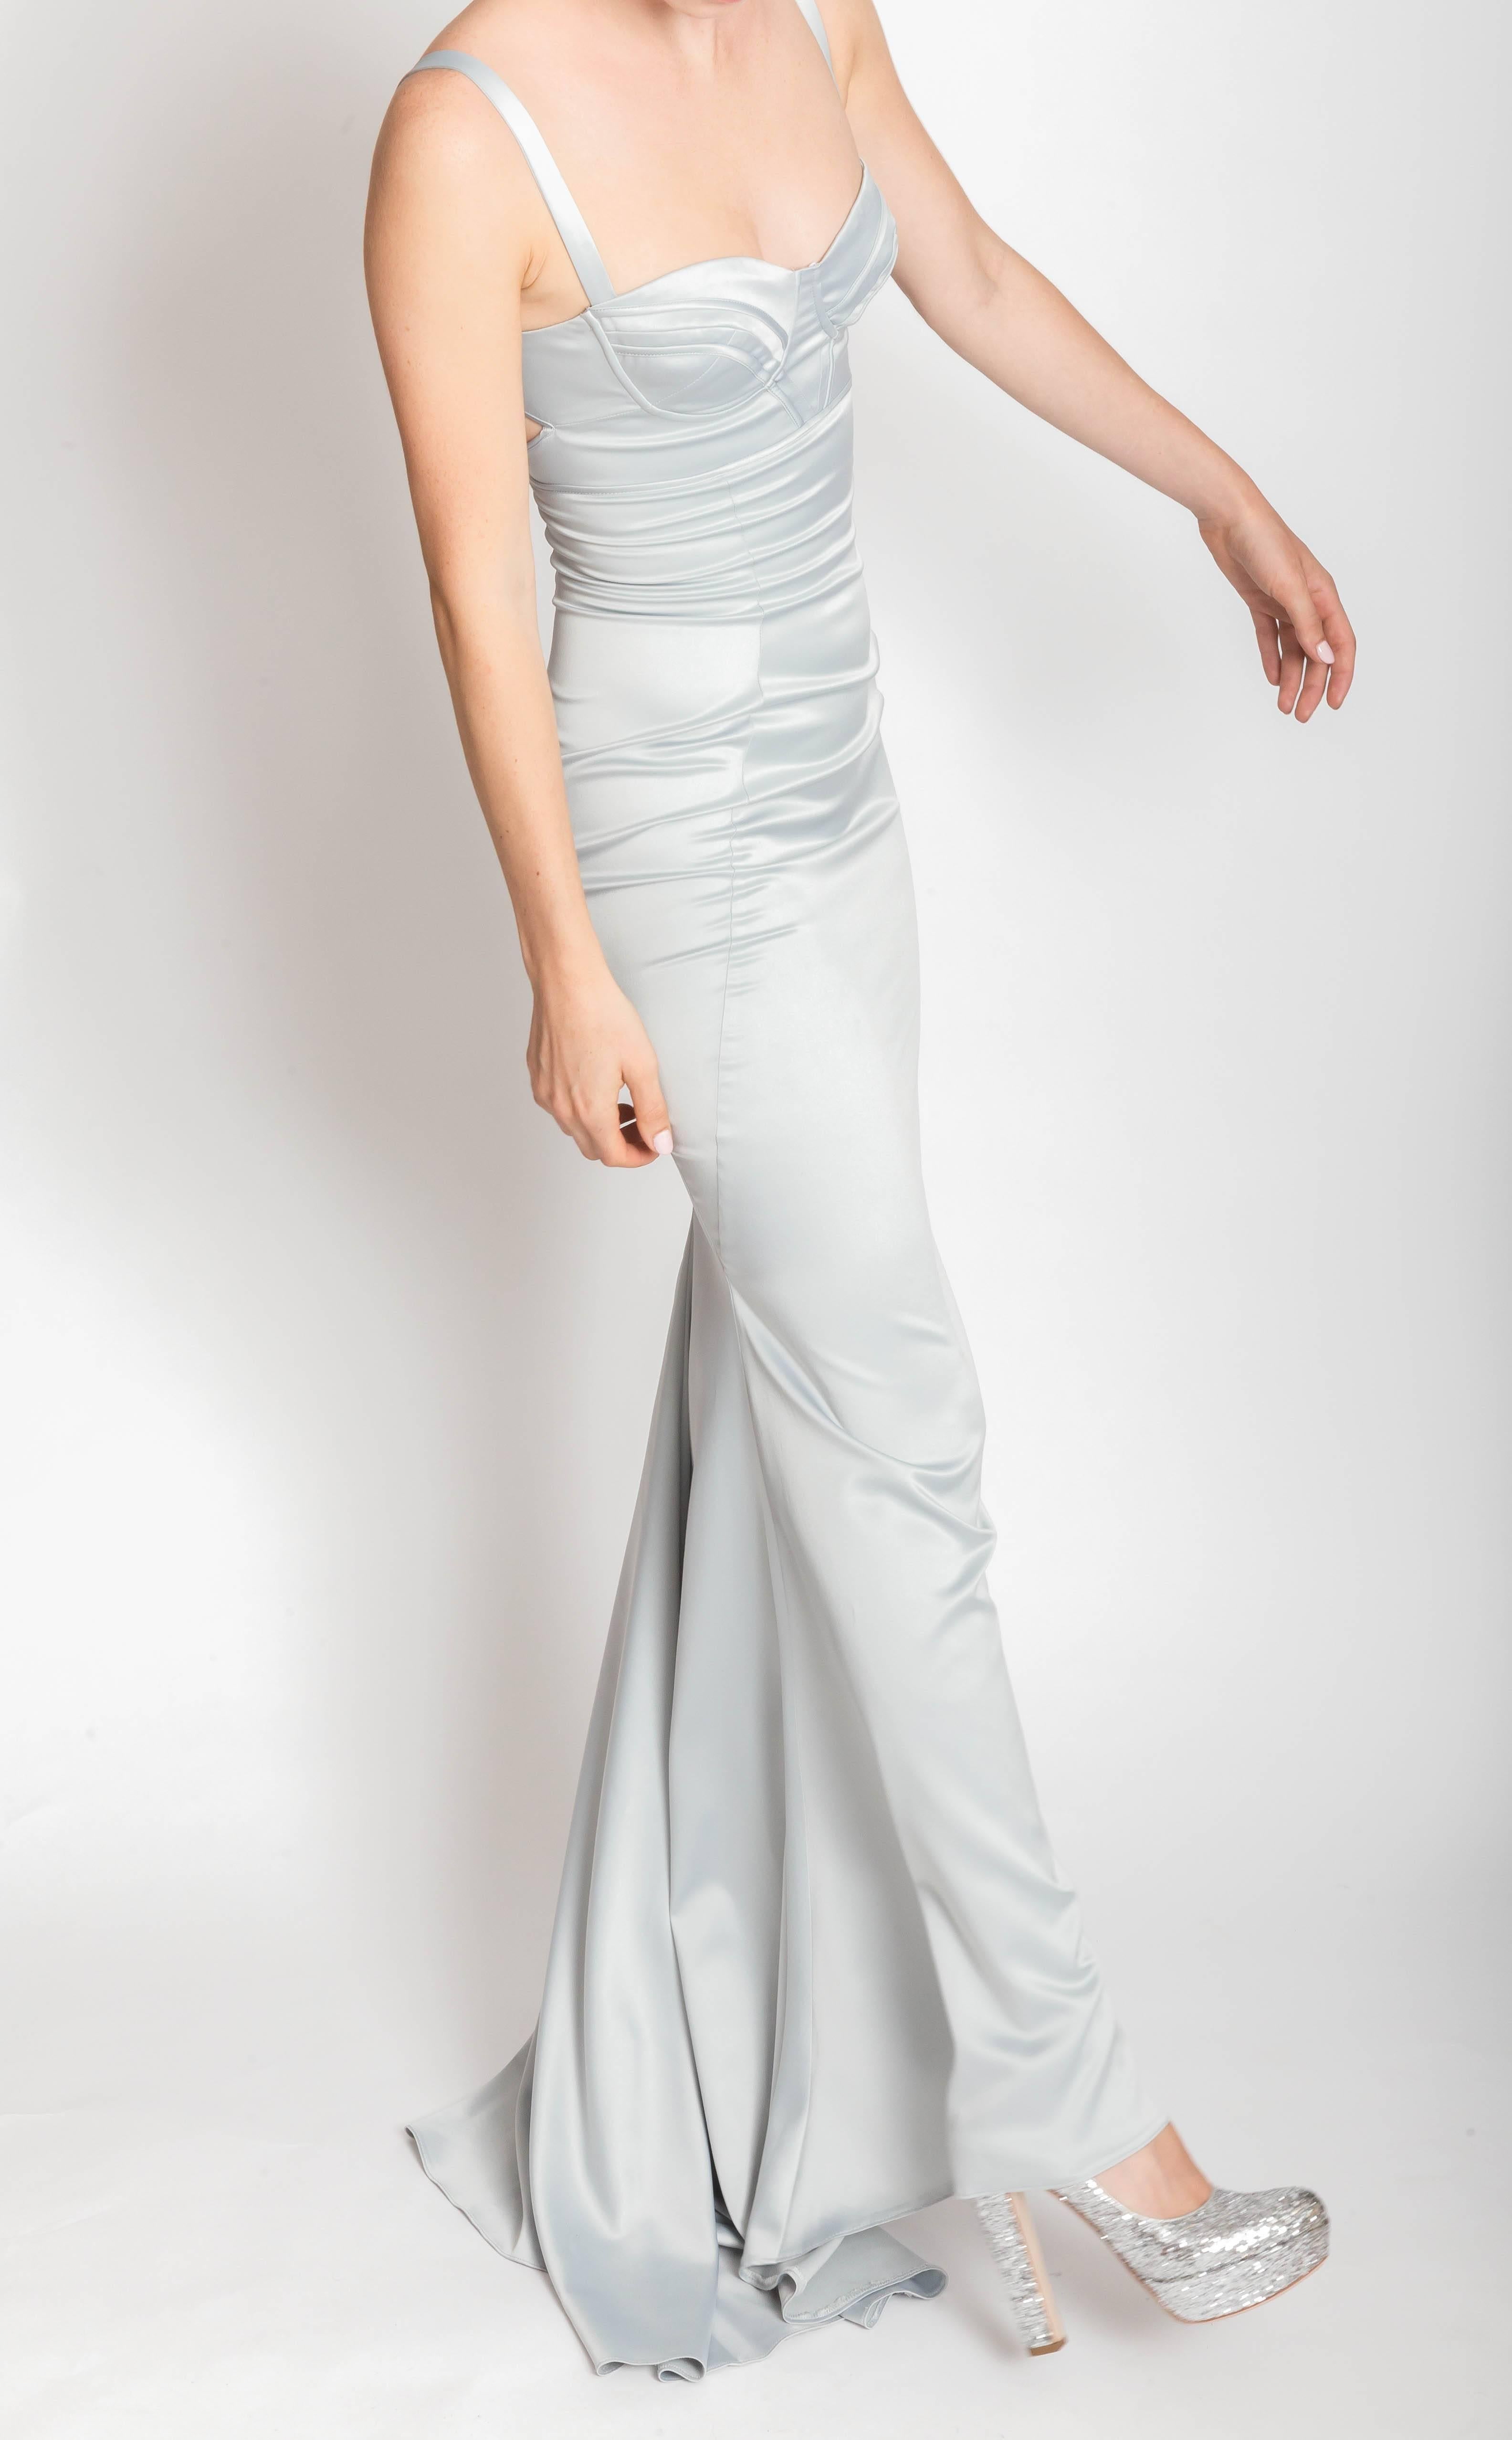 Roberto Cavalli Corset Gown - Size 38 4